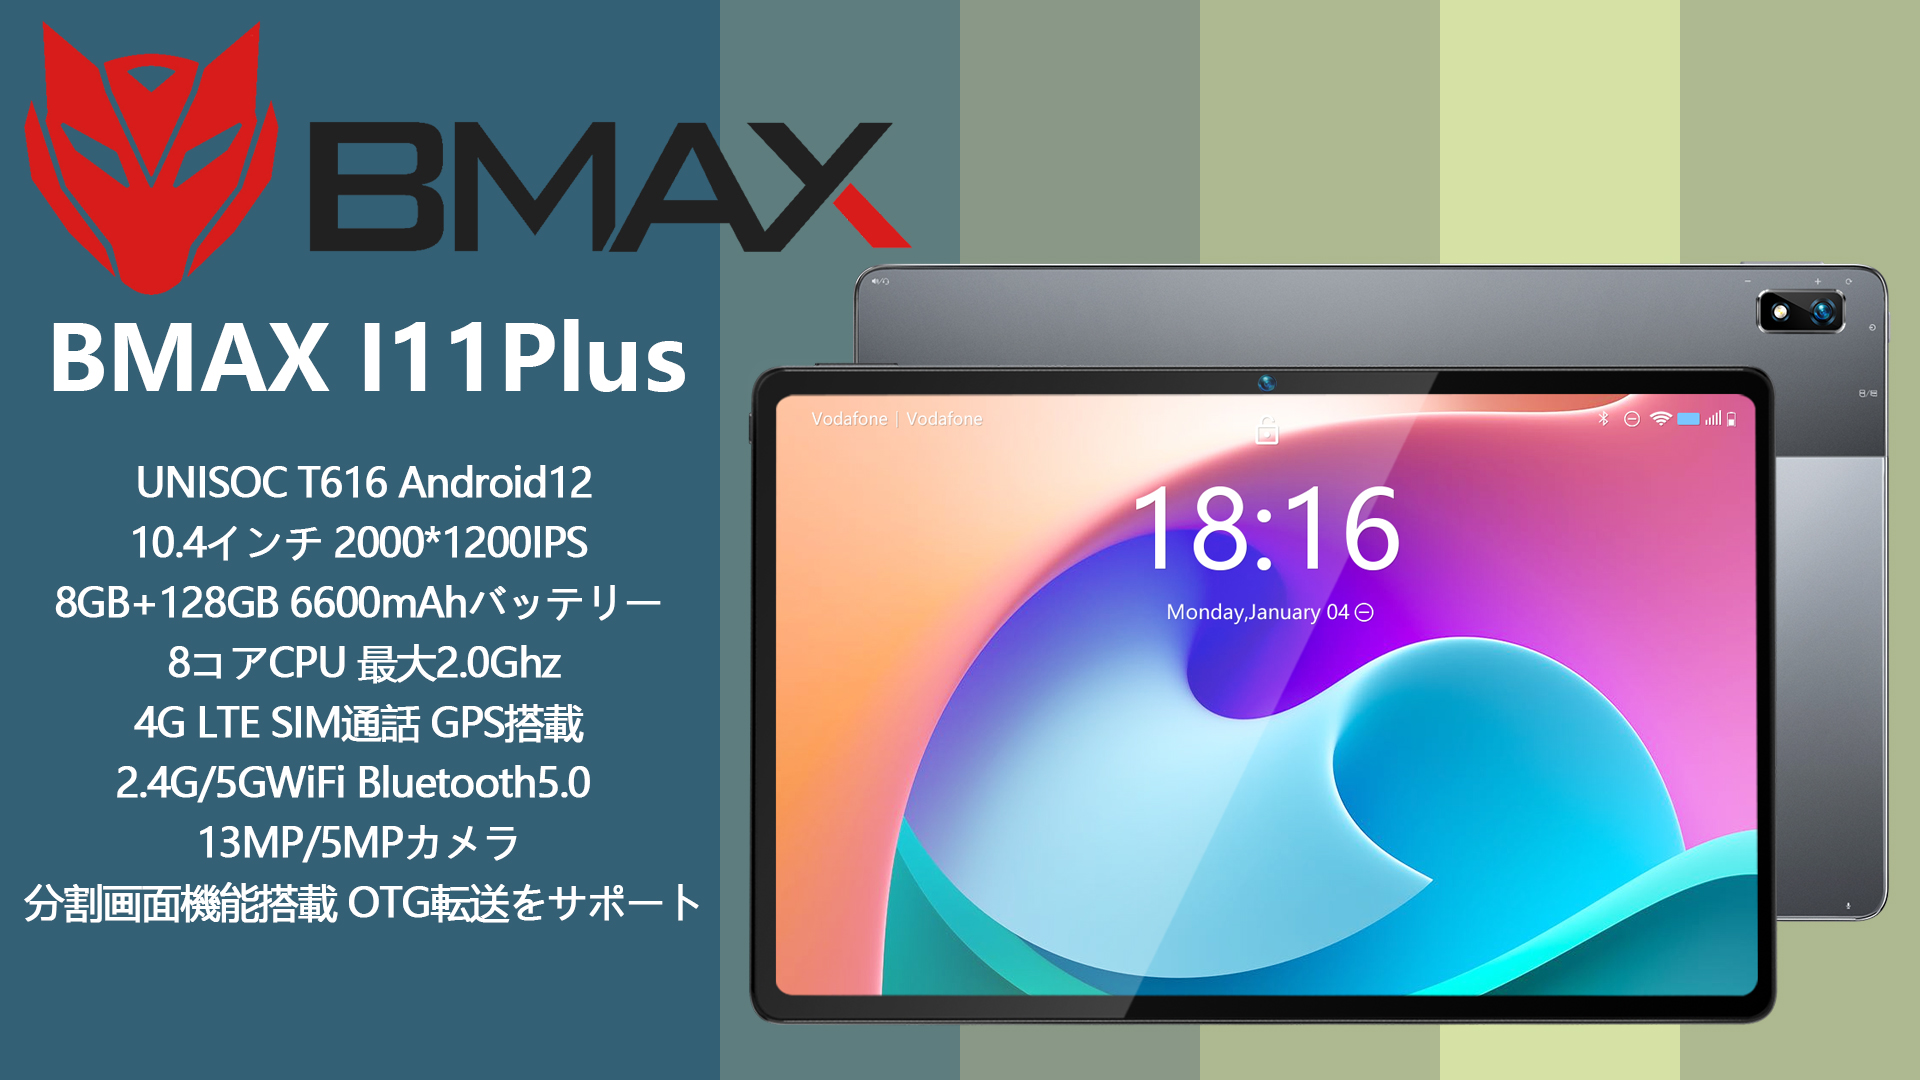 【Amazon 4月初 タブレット 期間限定秒殺プロモーション】BMAX I11Plus 限定キャンペーン、Android 12タブレット、8G+128G、最安値はわずか24,641円!